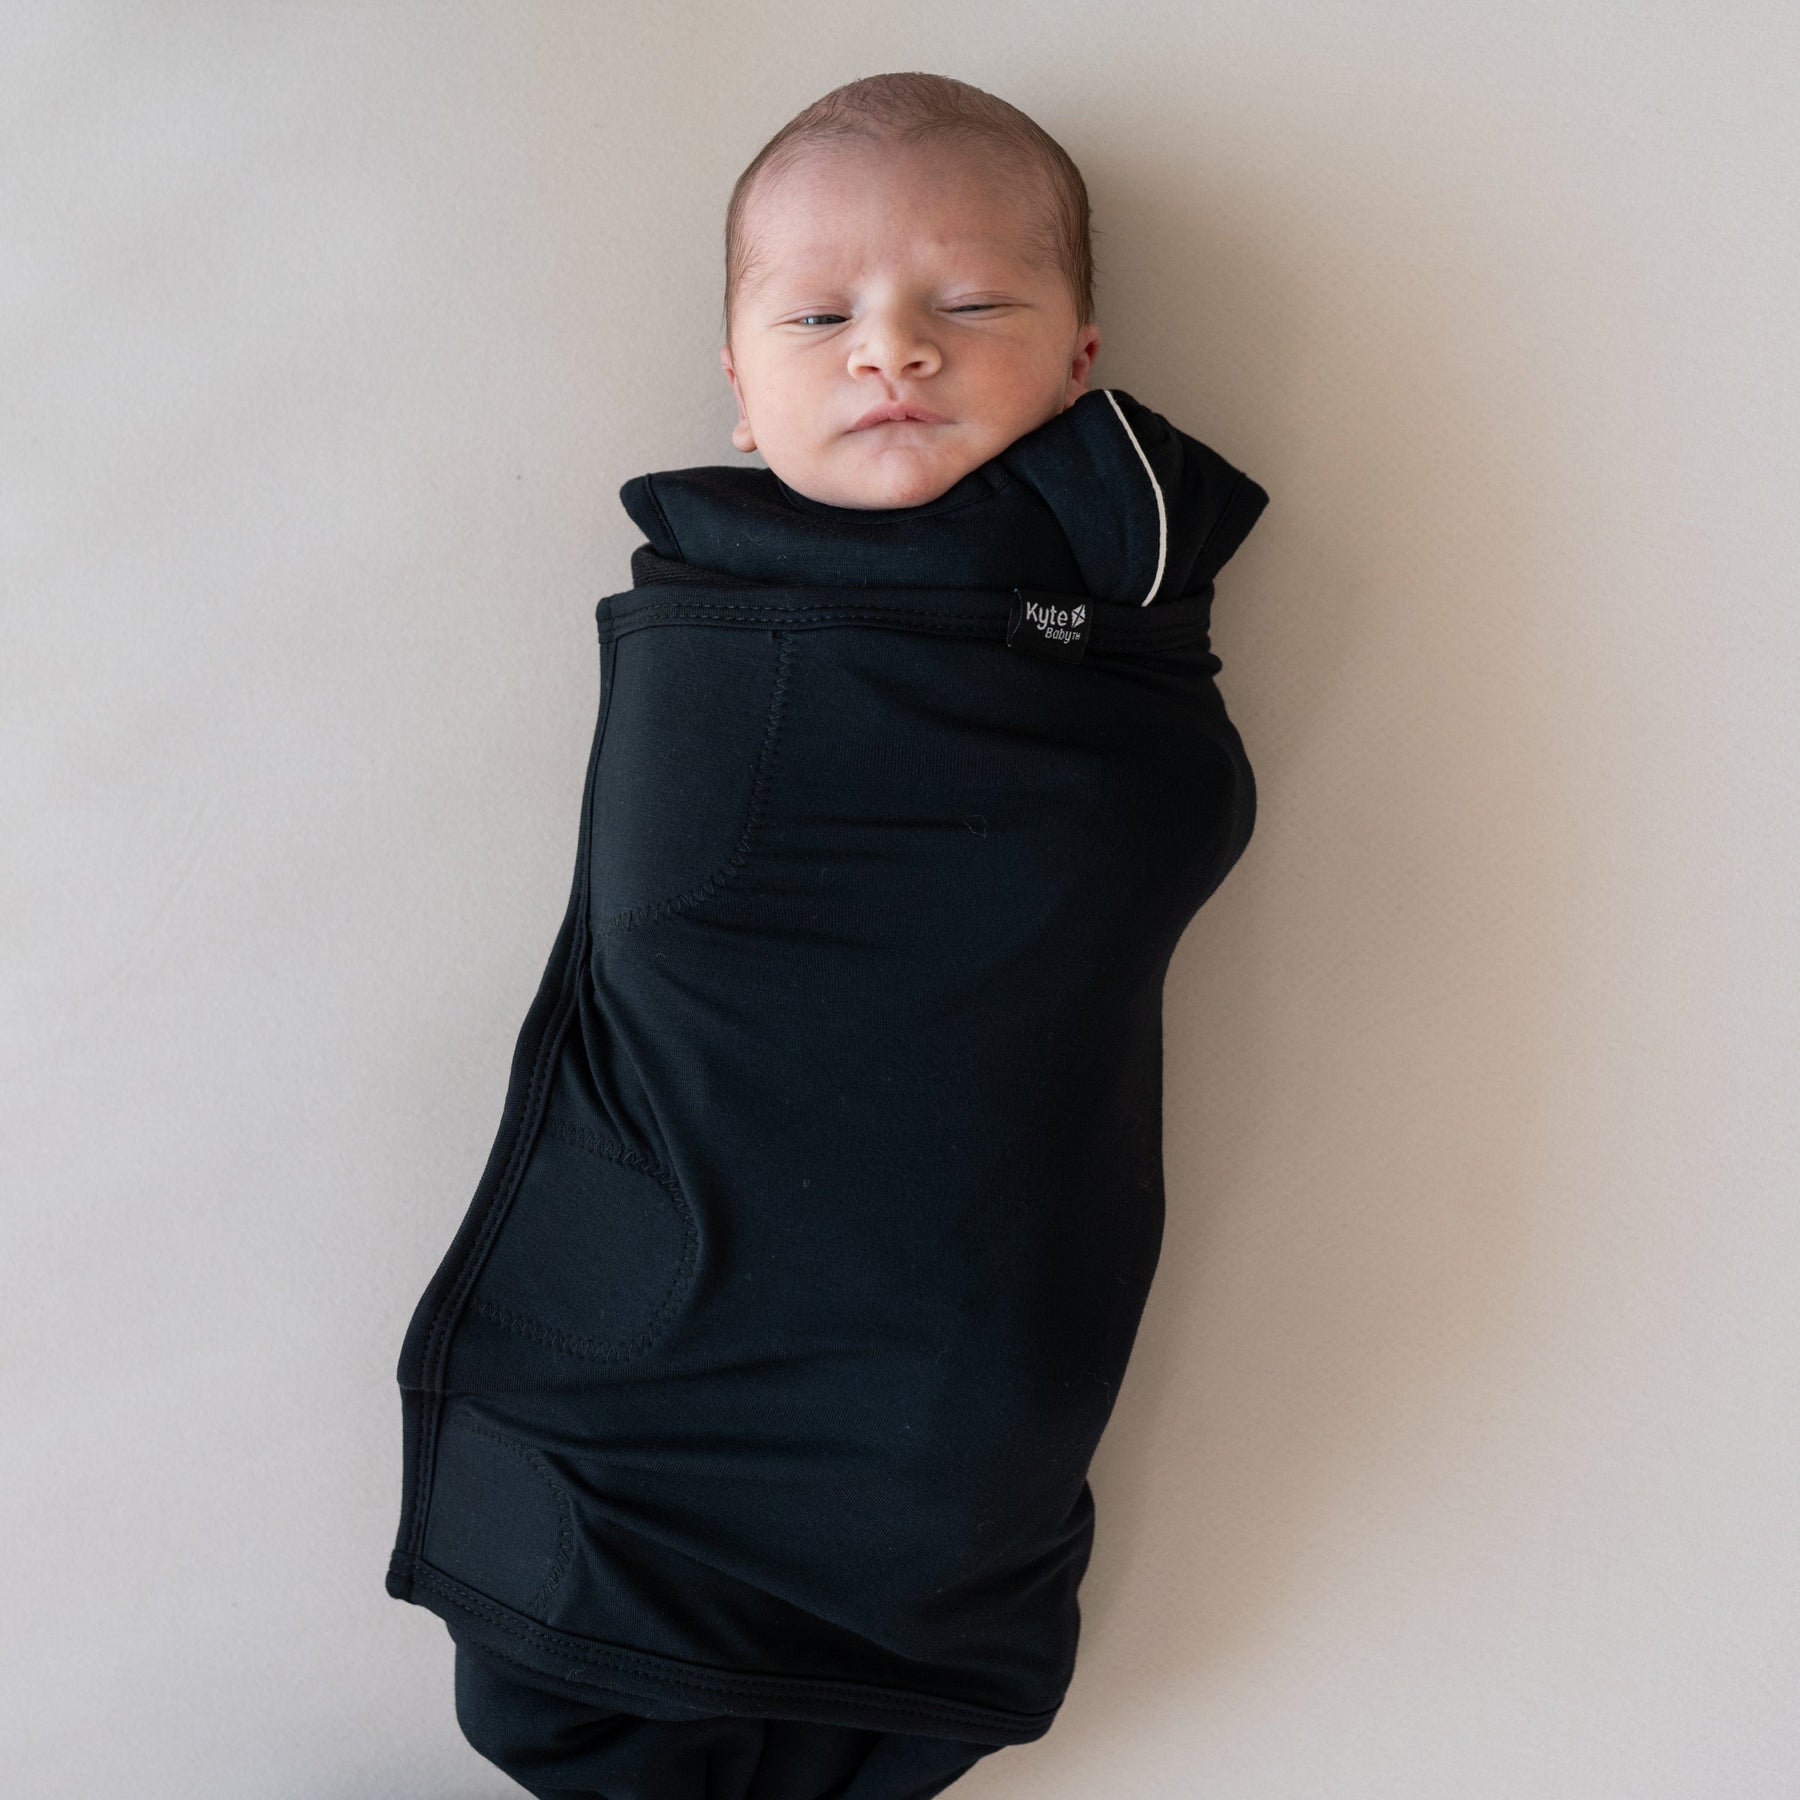 Baby wearing Kyte Baby bamboo Sleep Bag Swaddler in Midnight